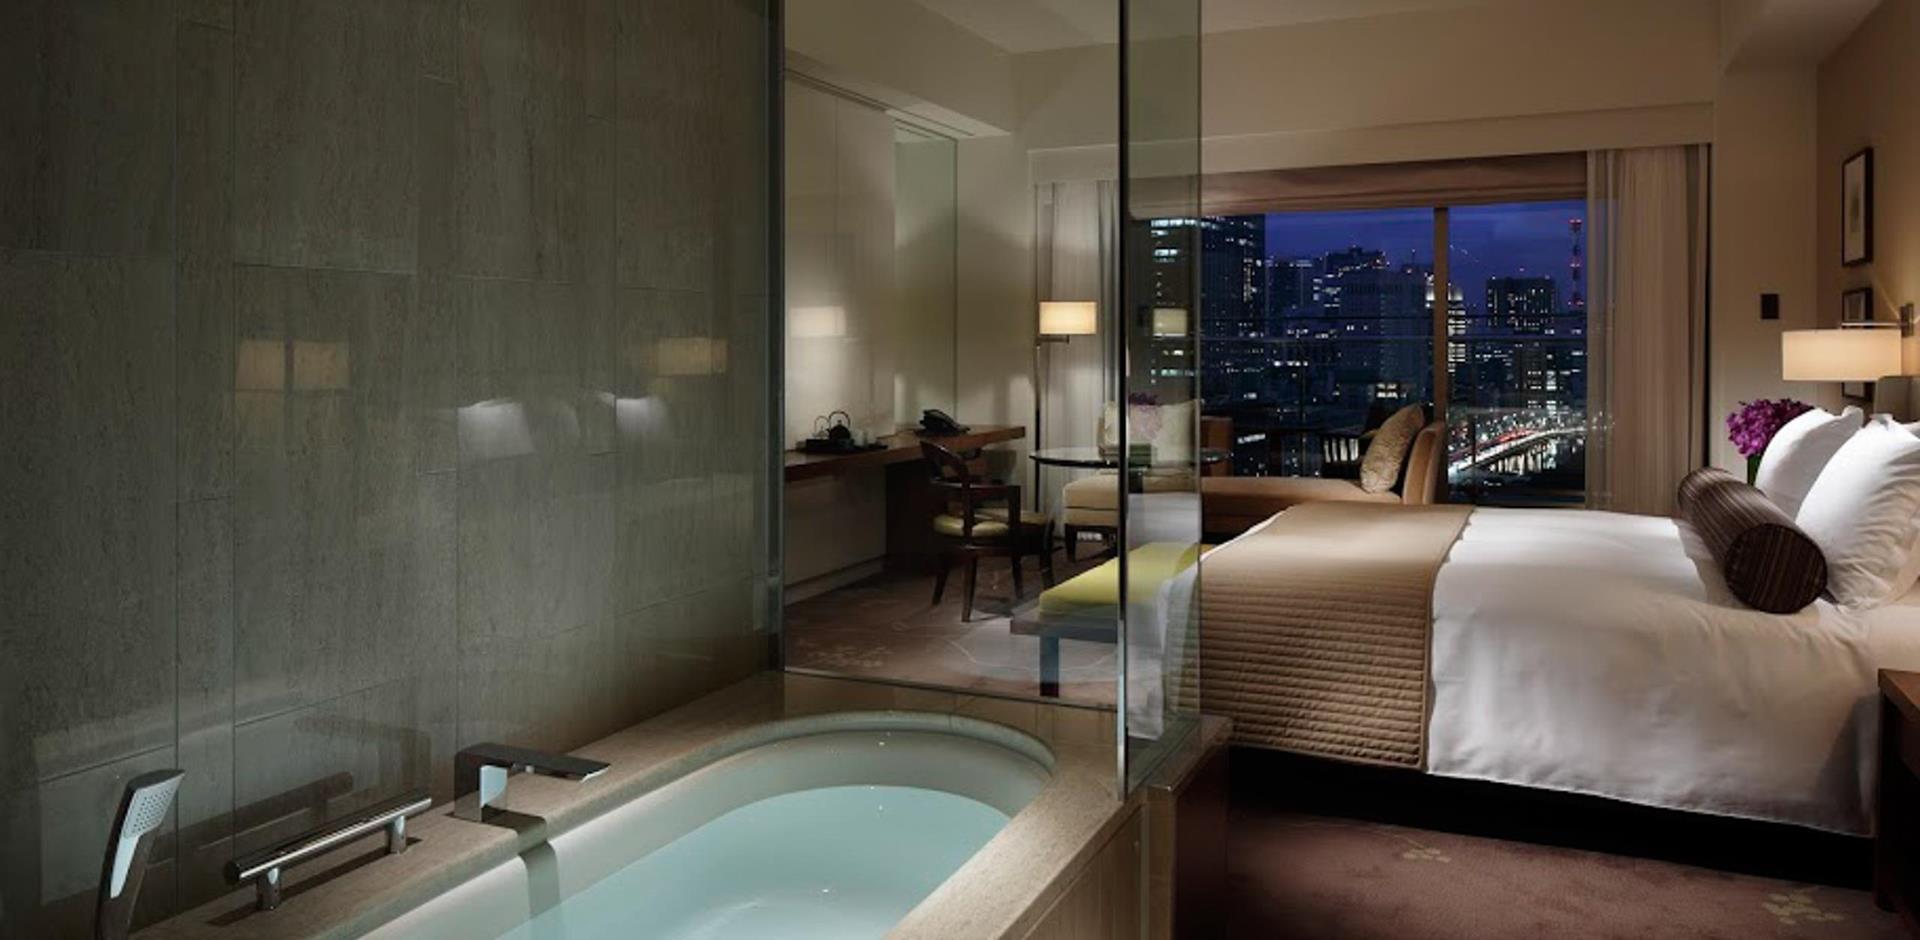 Bedroom Bathroom, Palace Hotel Tokyo, Japan